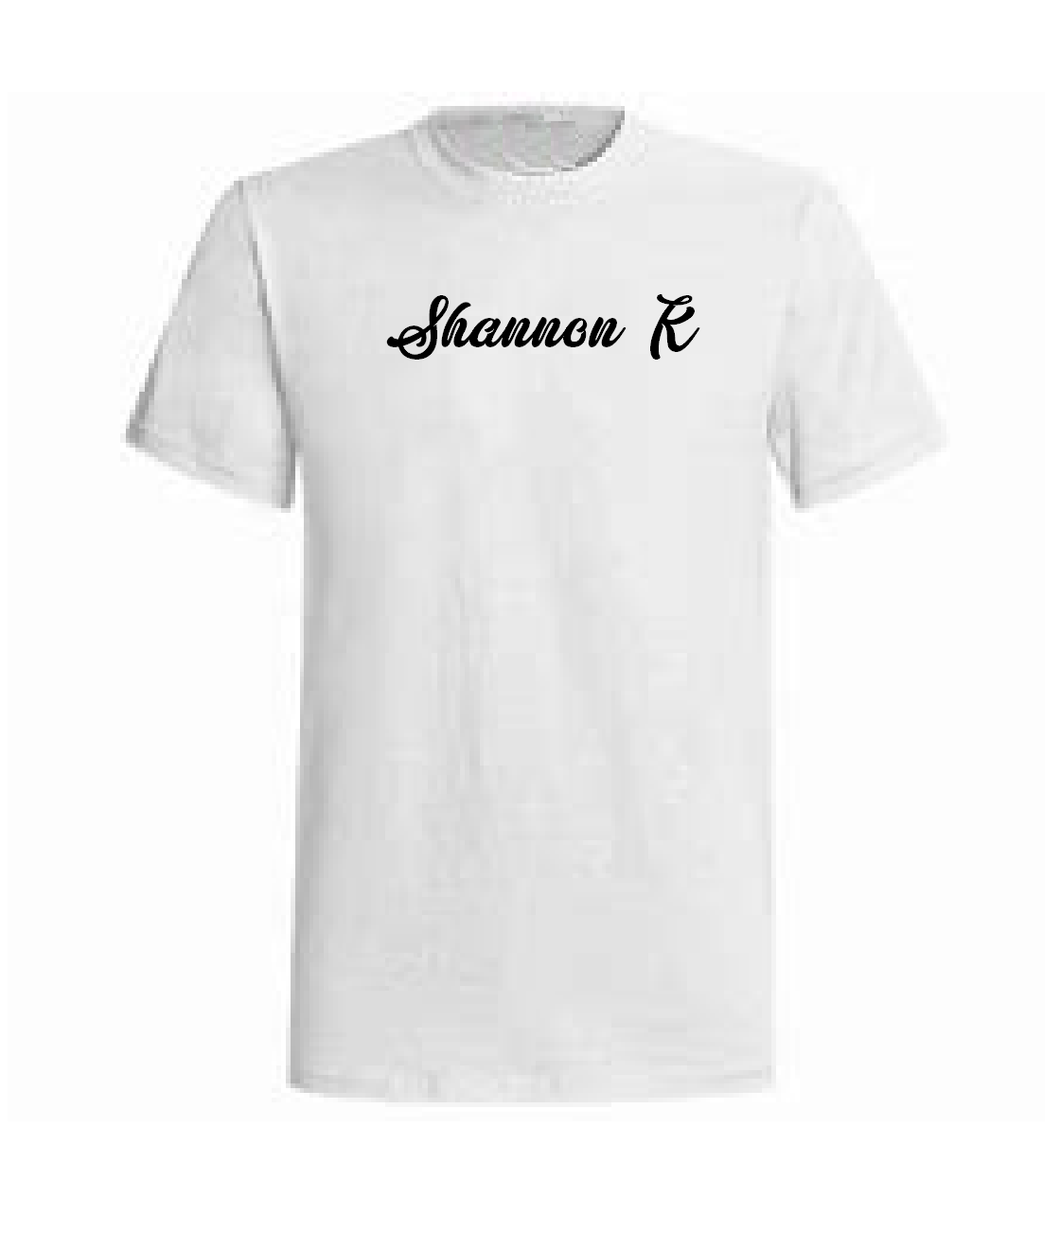 T-Shirt SHANNON K